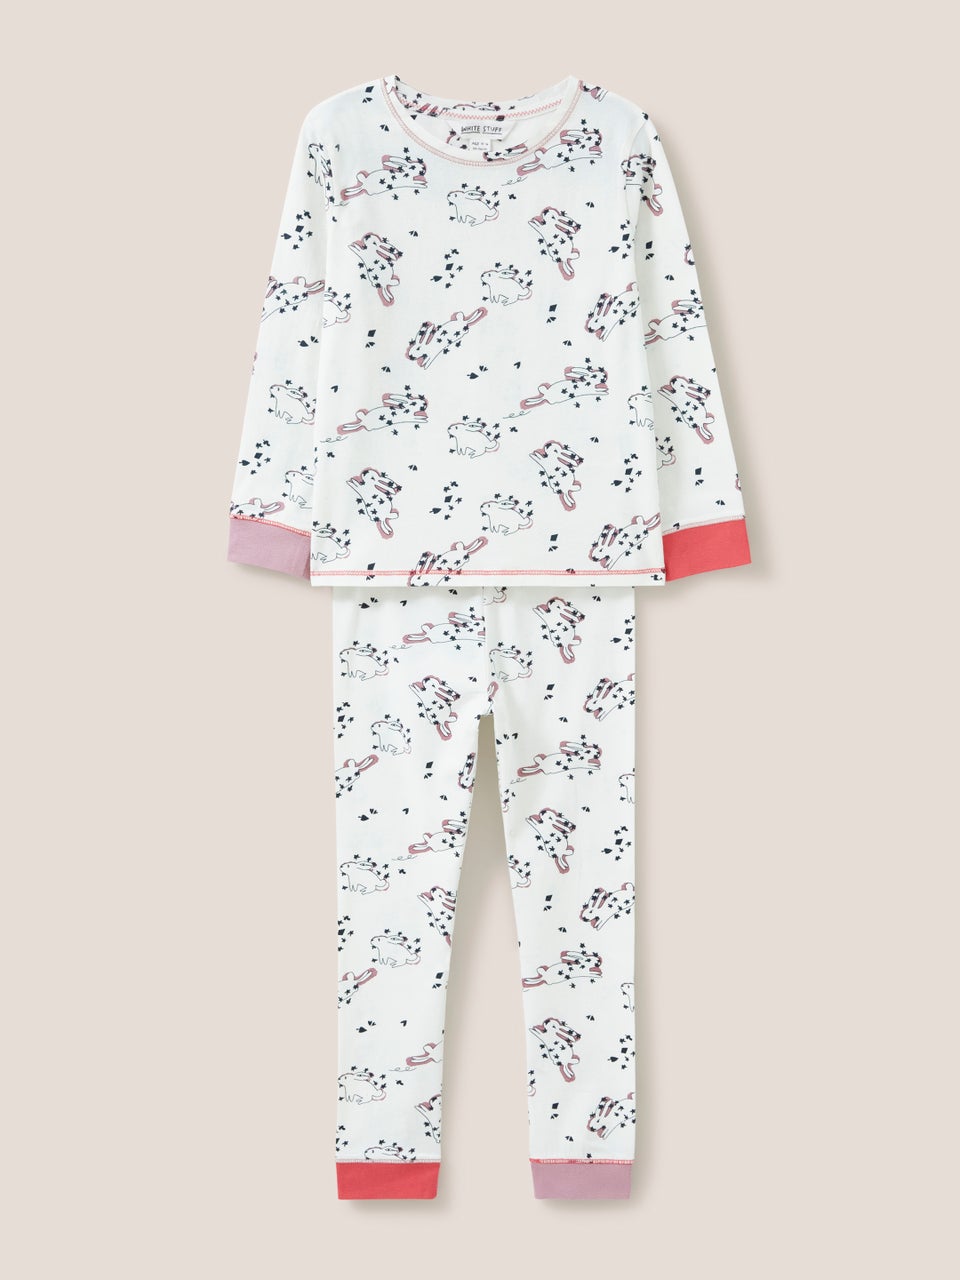 Pyjama-Set mit Hasen-Print